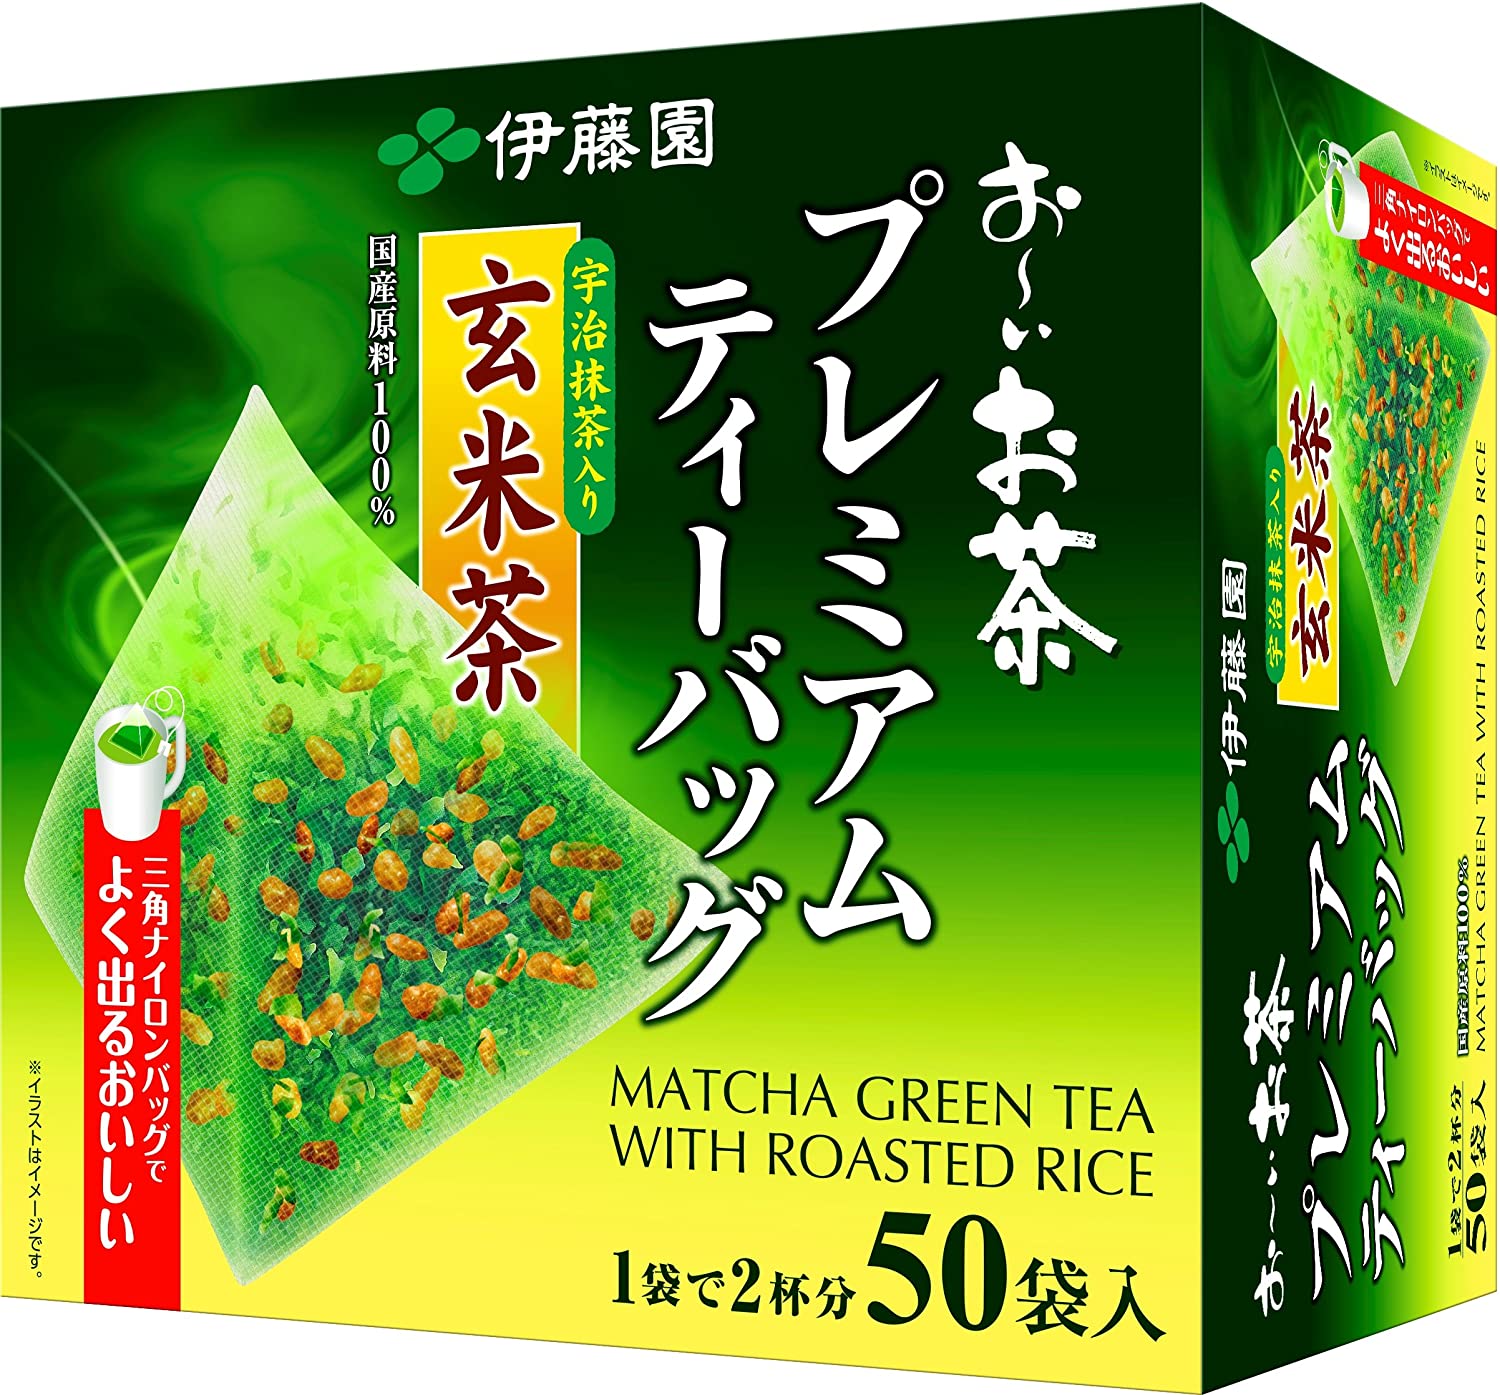 ITOEN Premium Tea Bag : Genmaicha (50 bags) ชาเขียวข้าวคั่วหอมกรุ่น